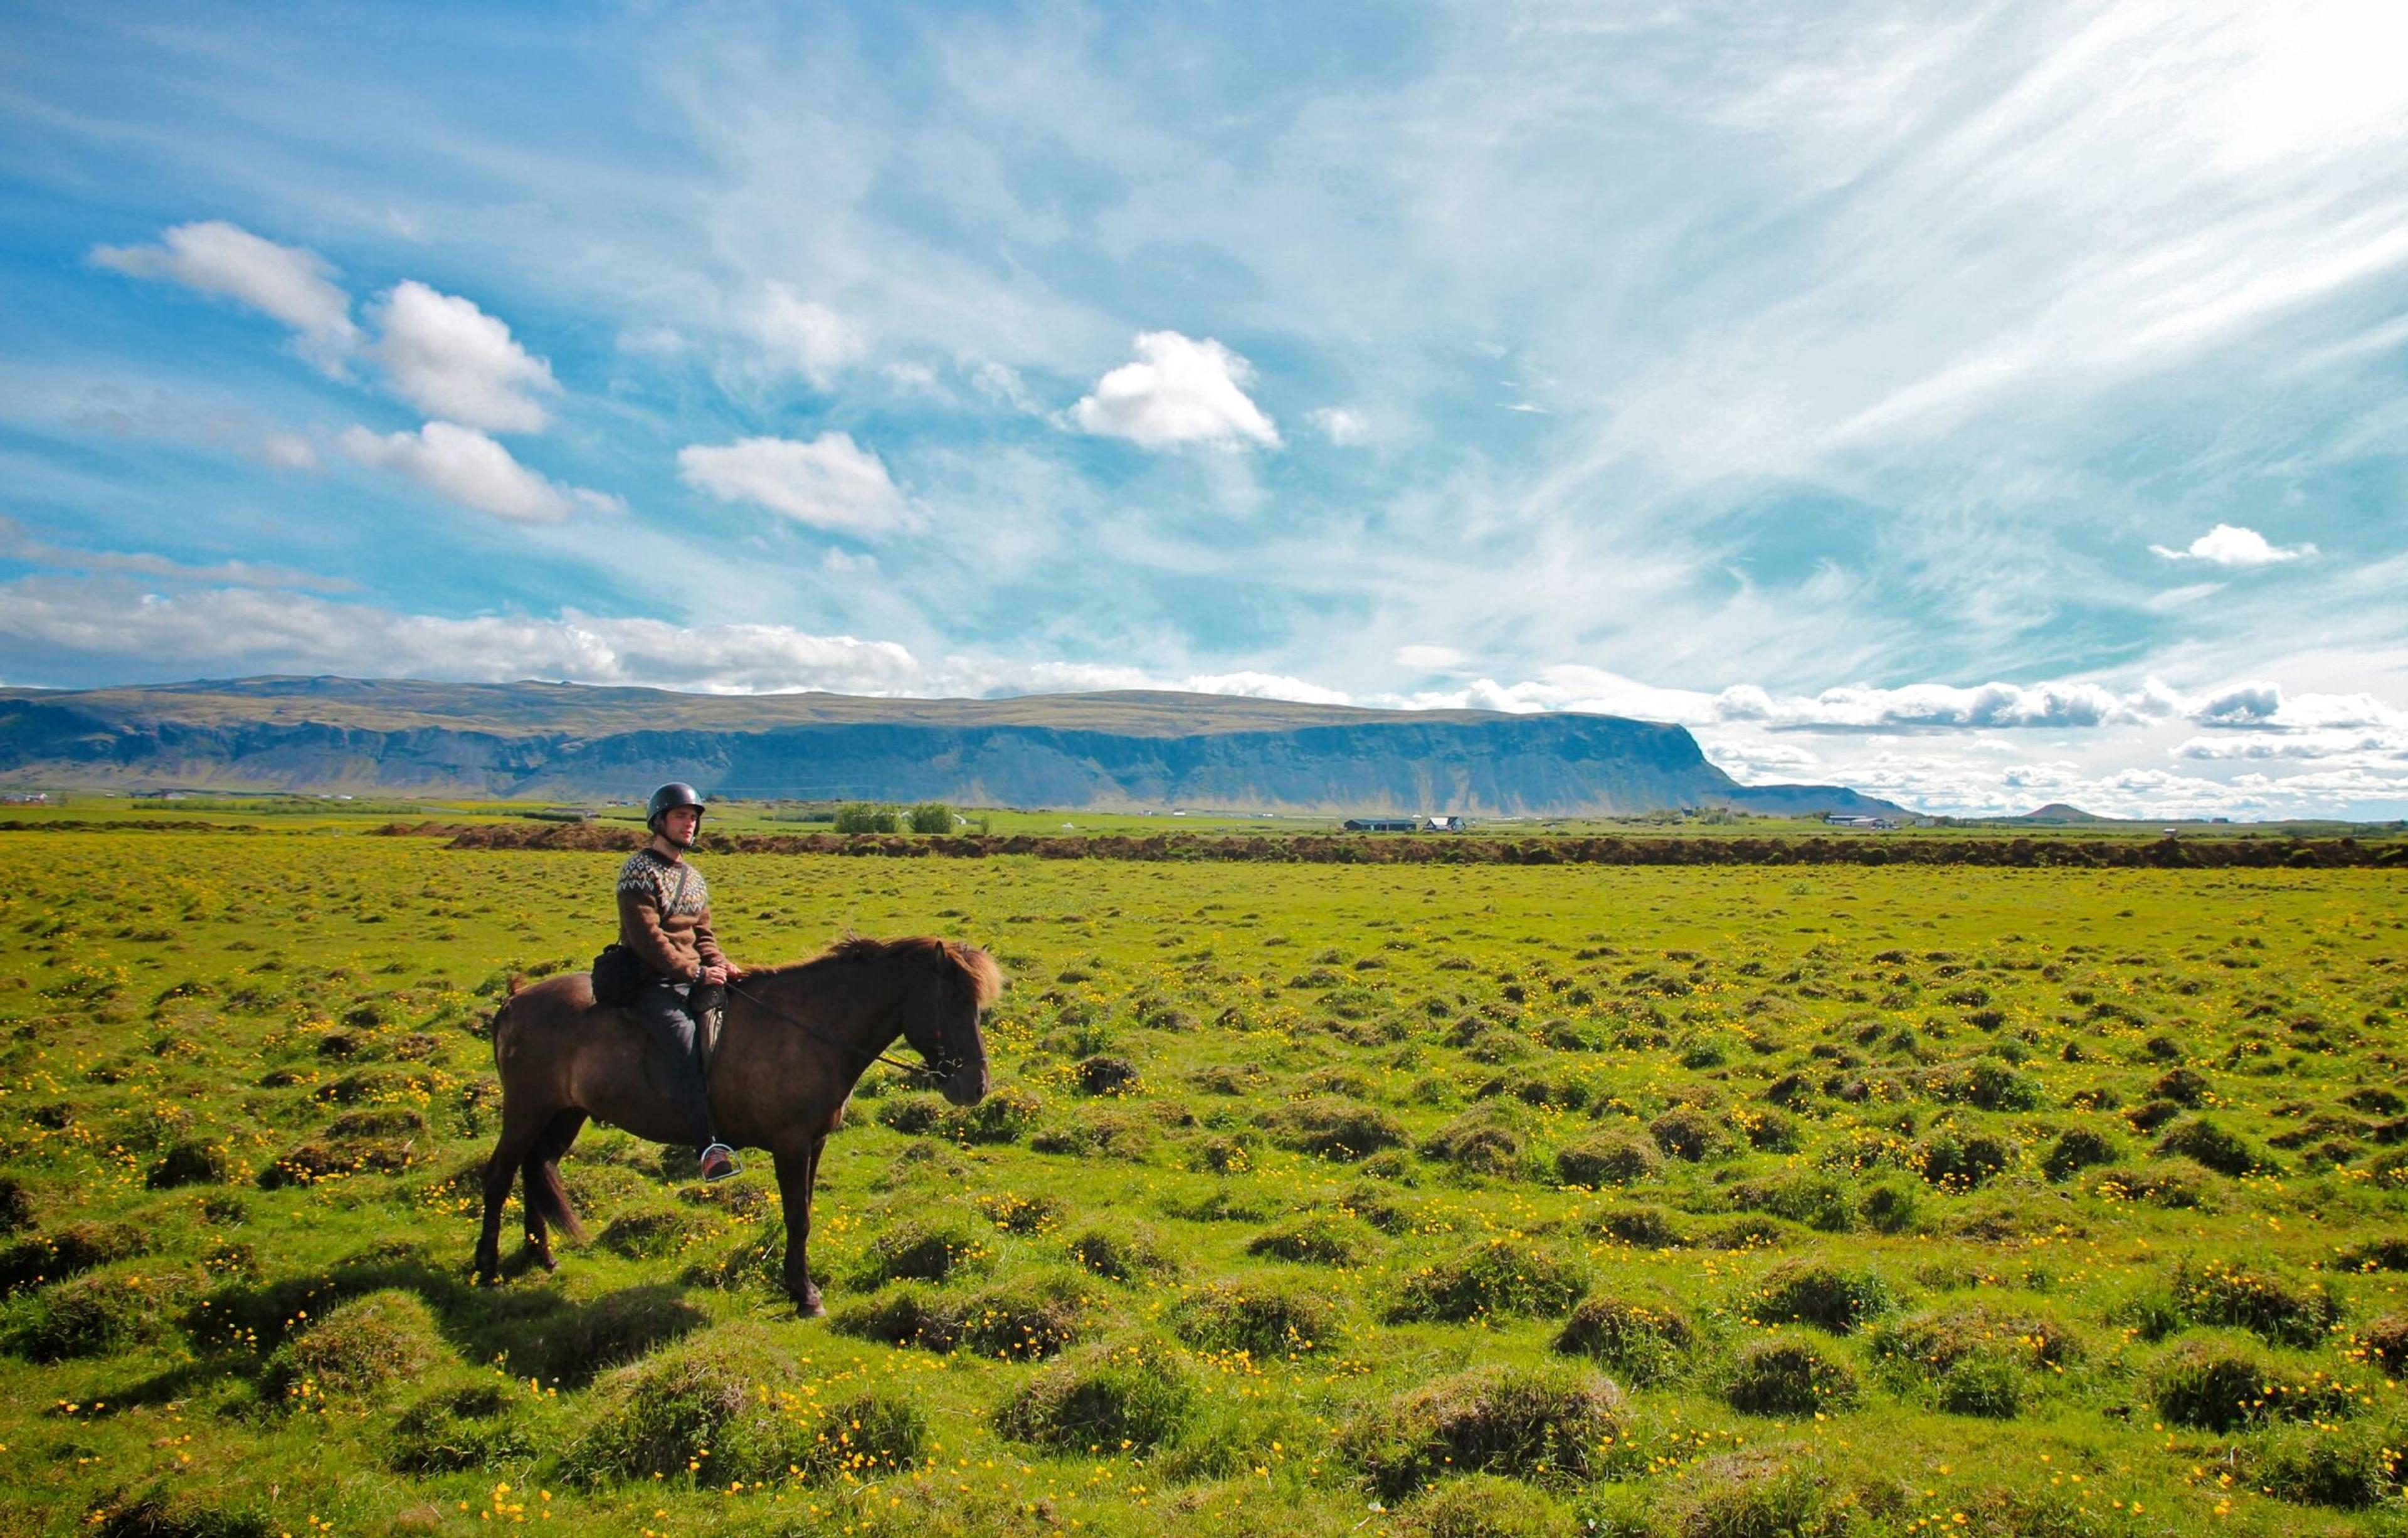 A person on horseback riding through a sunlit green meadow